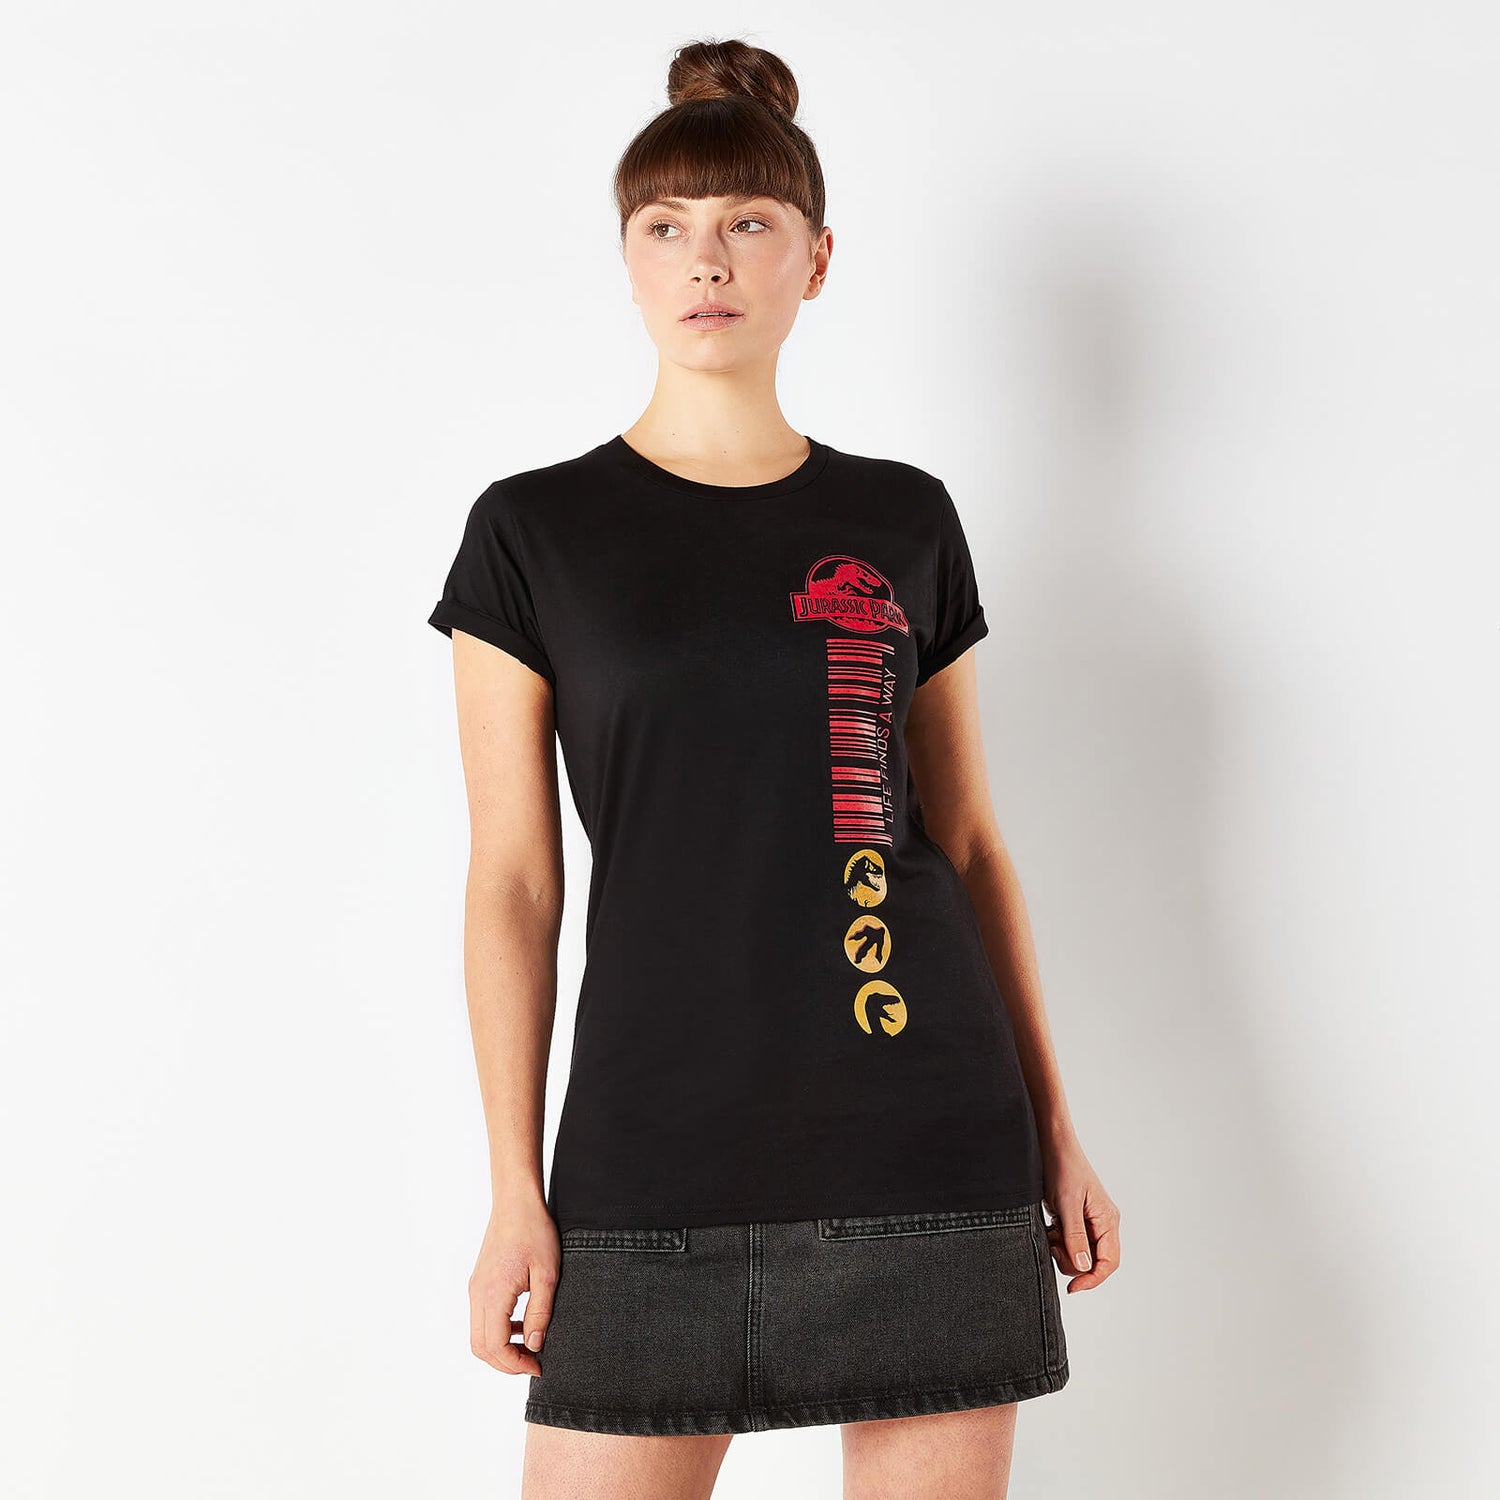 Jurassic Park Women's T-Shirt - Black